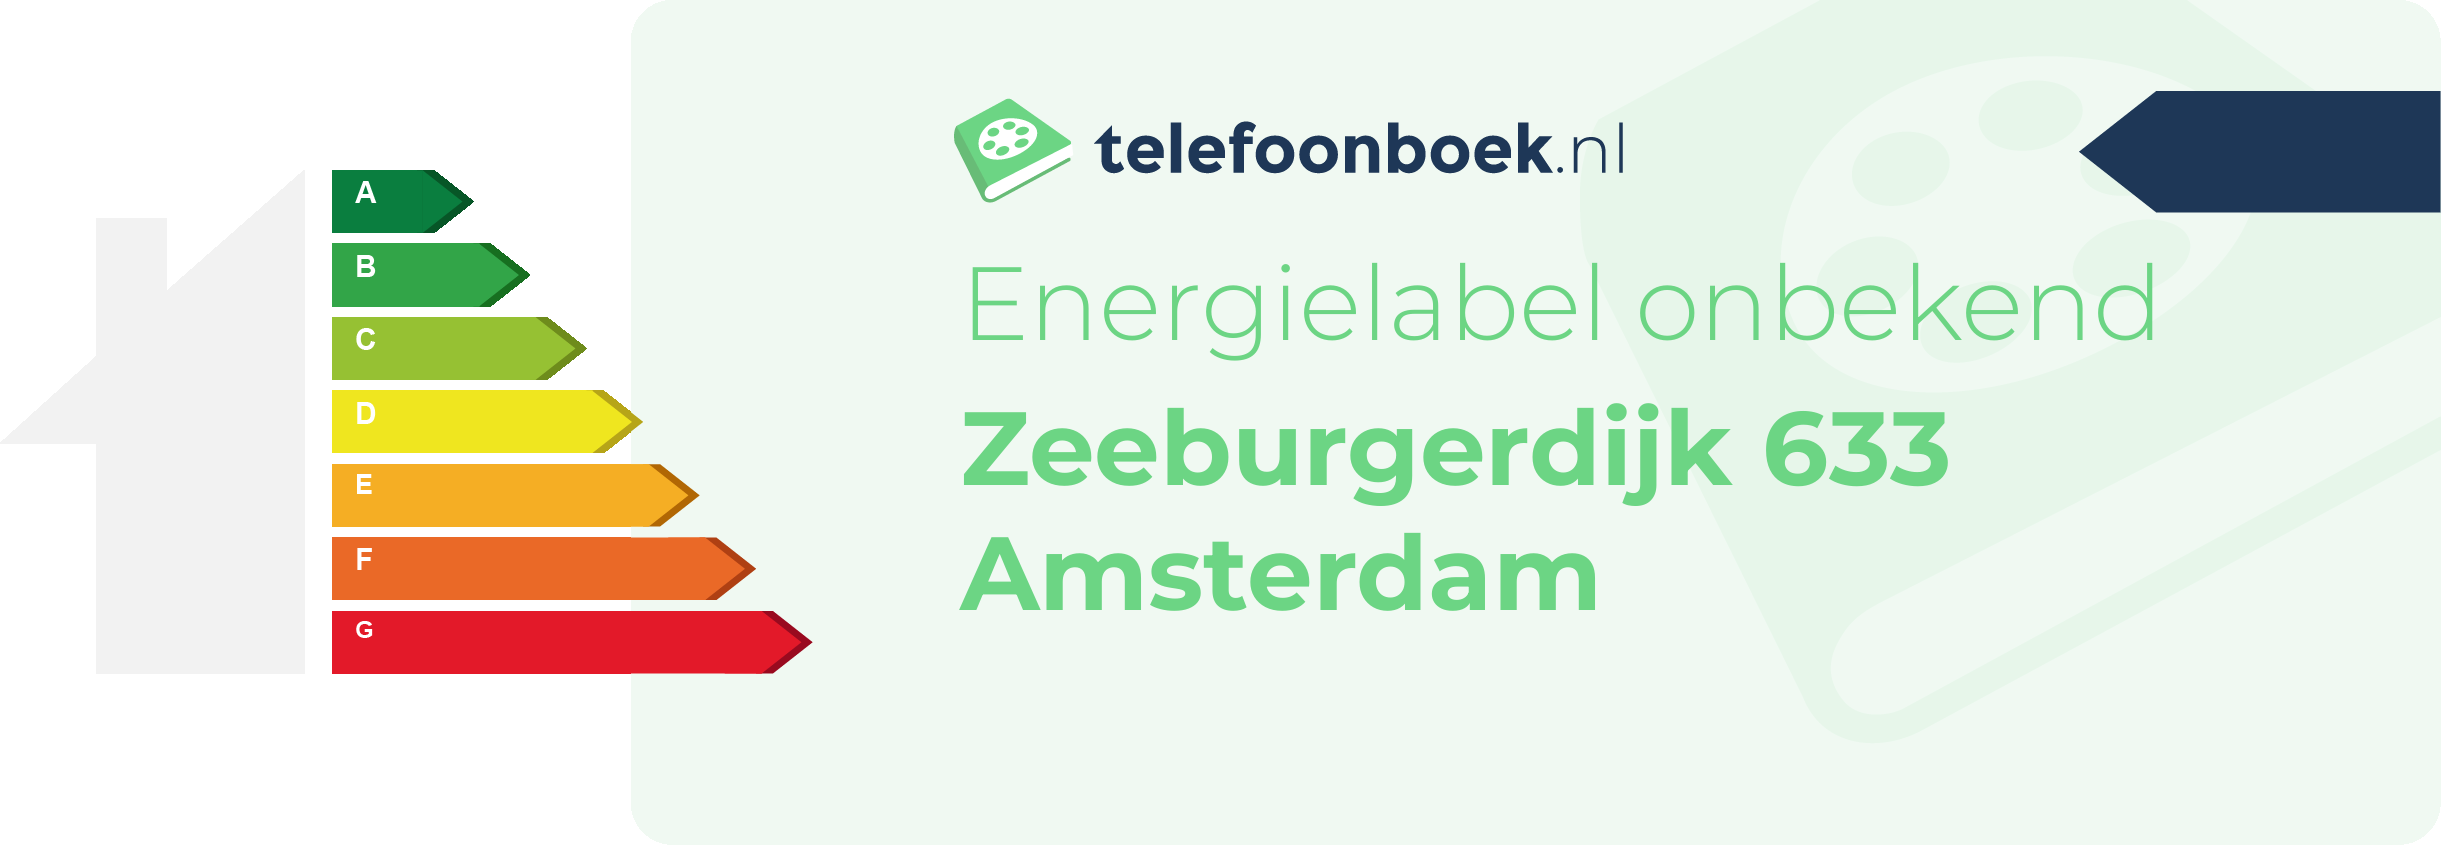 Energielabel Zeeburgerdijk 633 Amsterdam